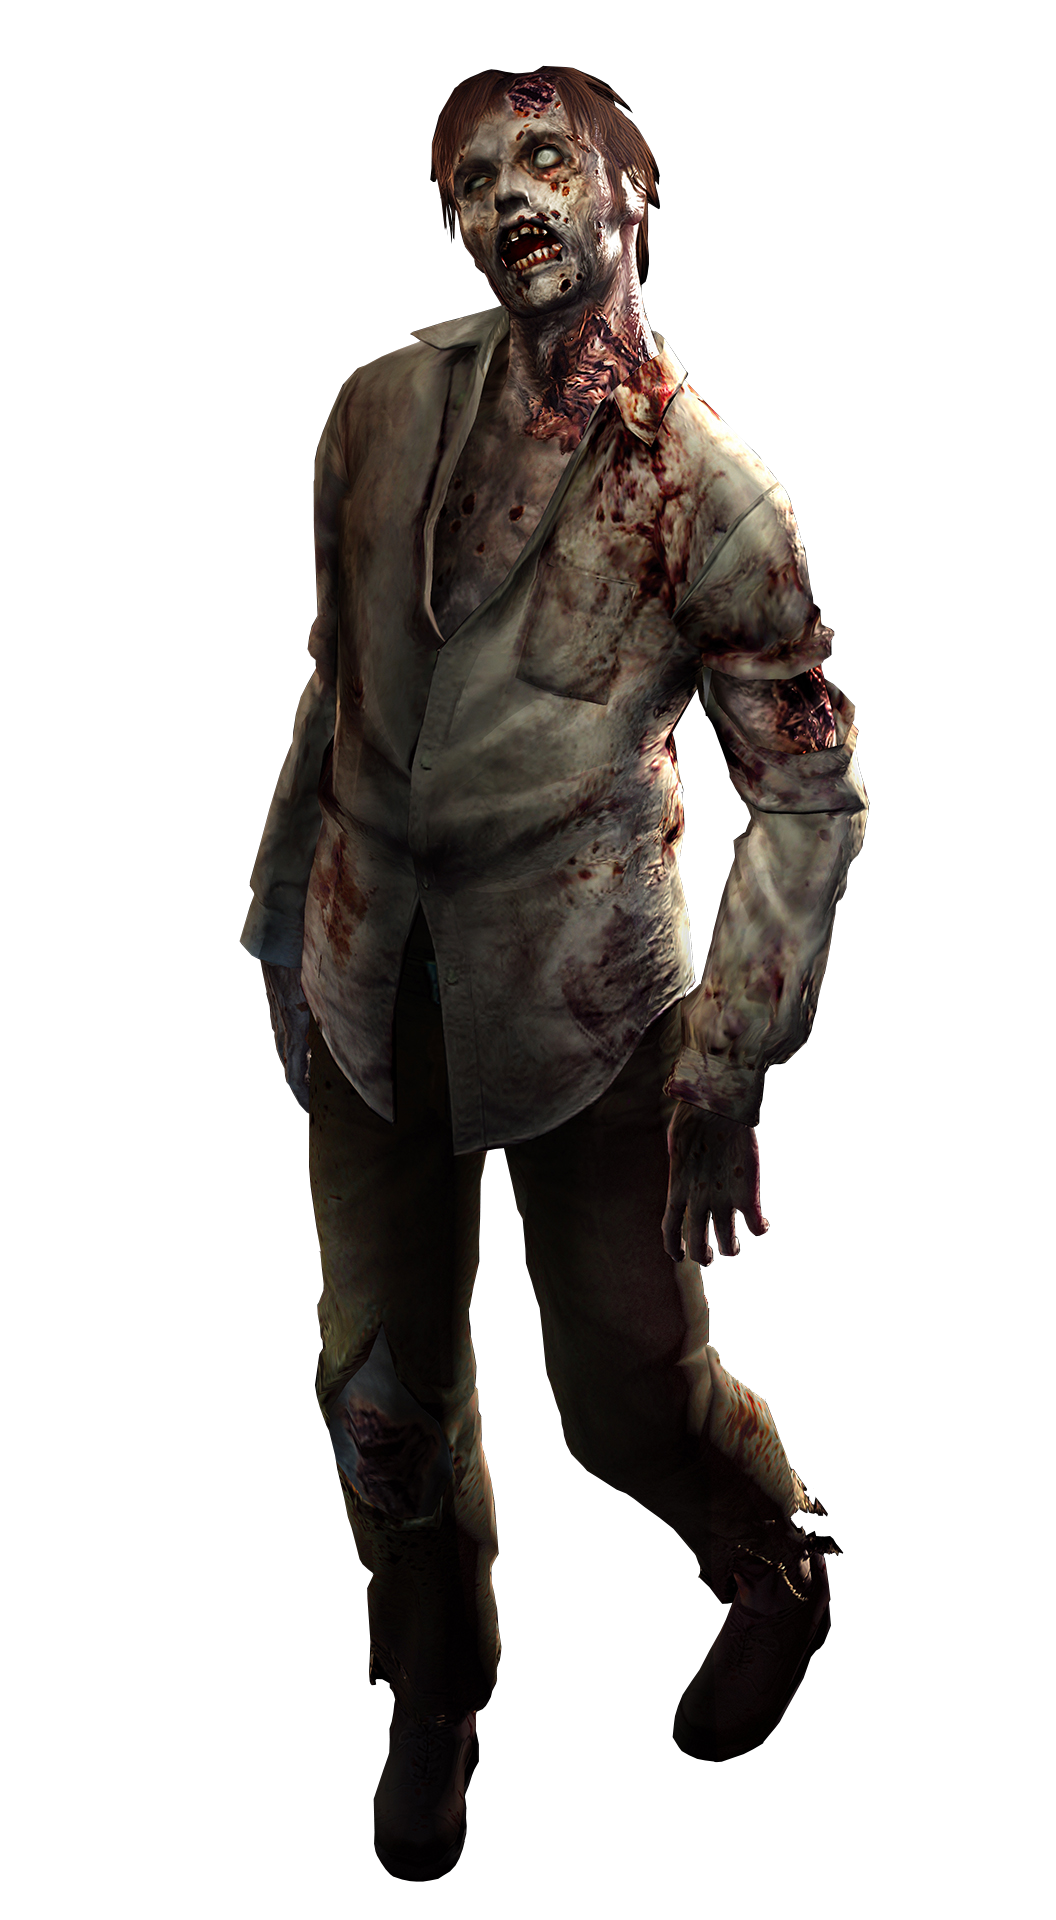 Zombie - Wikipedia